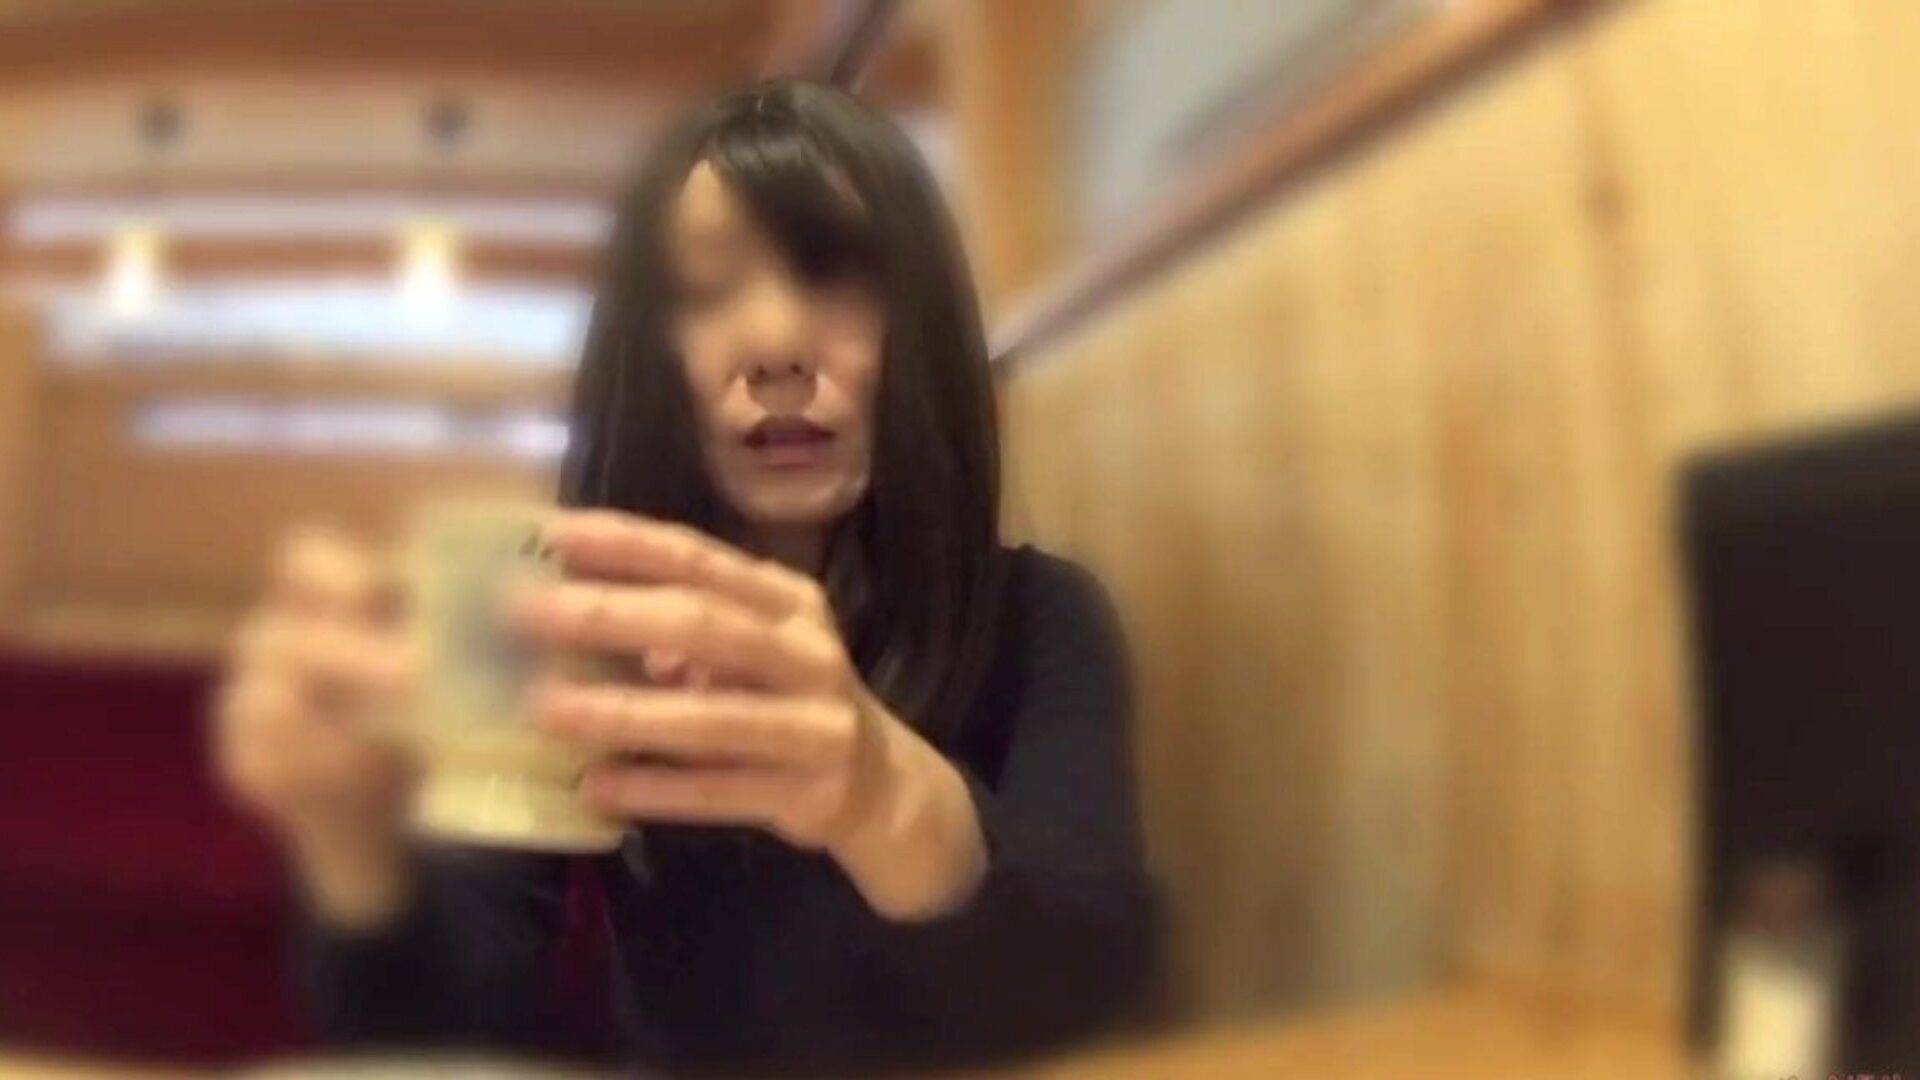 paroháč manželka sundala kalhotky v kavárně: porno zdarma 60 sledovat paroháč manželka sundala kalhotky v kavárně video na xhamster - konečný hejno bezplatných asijských japonských hd gonzo porno videí